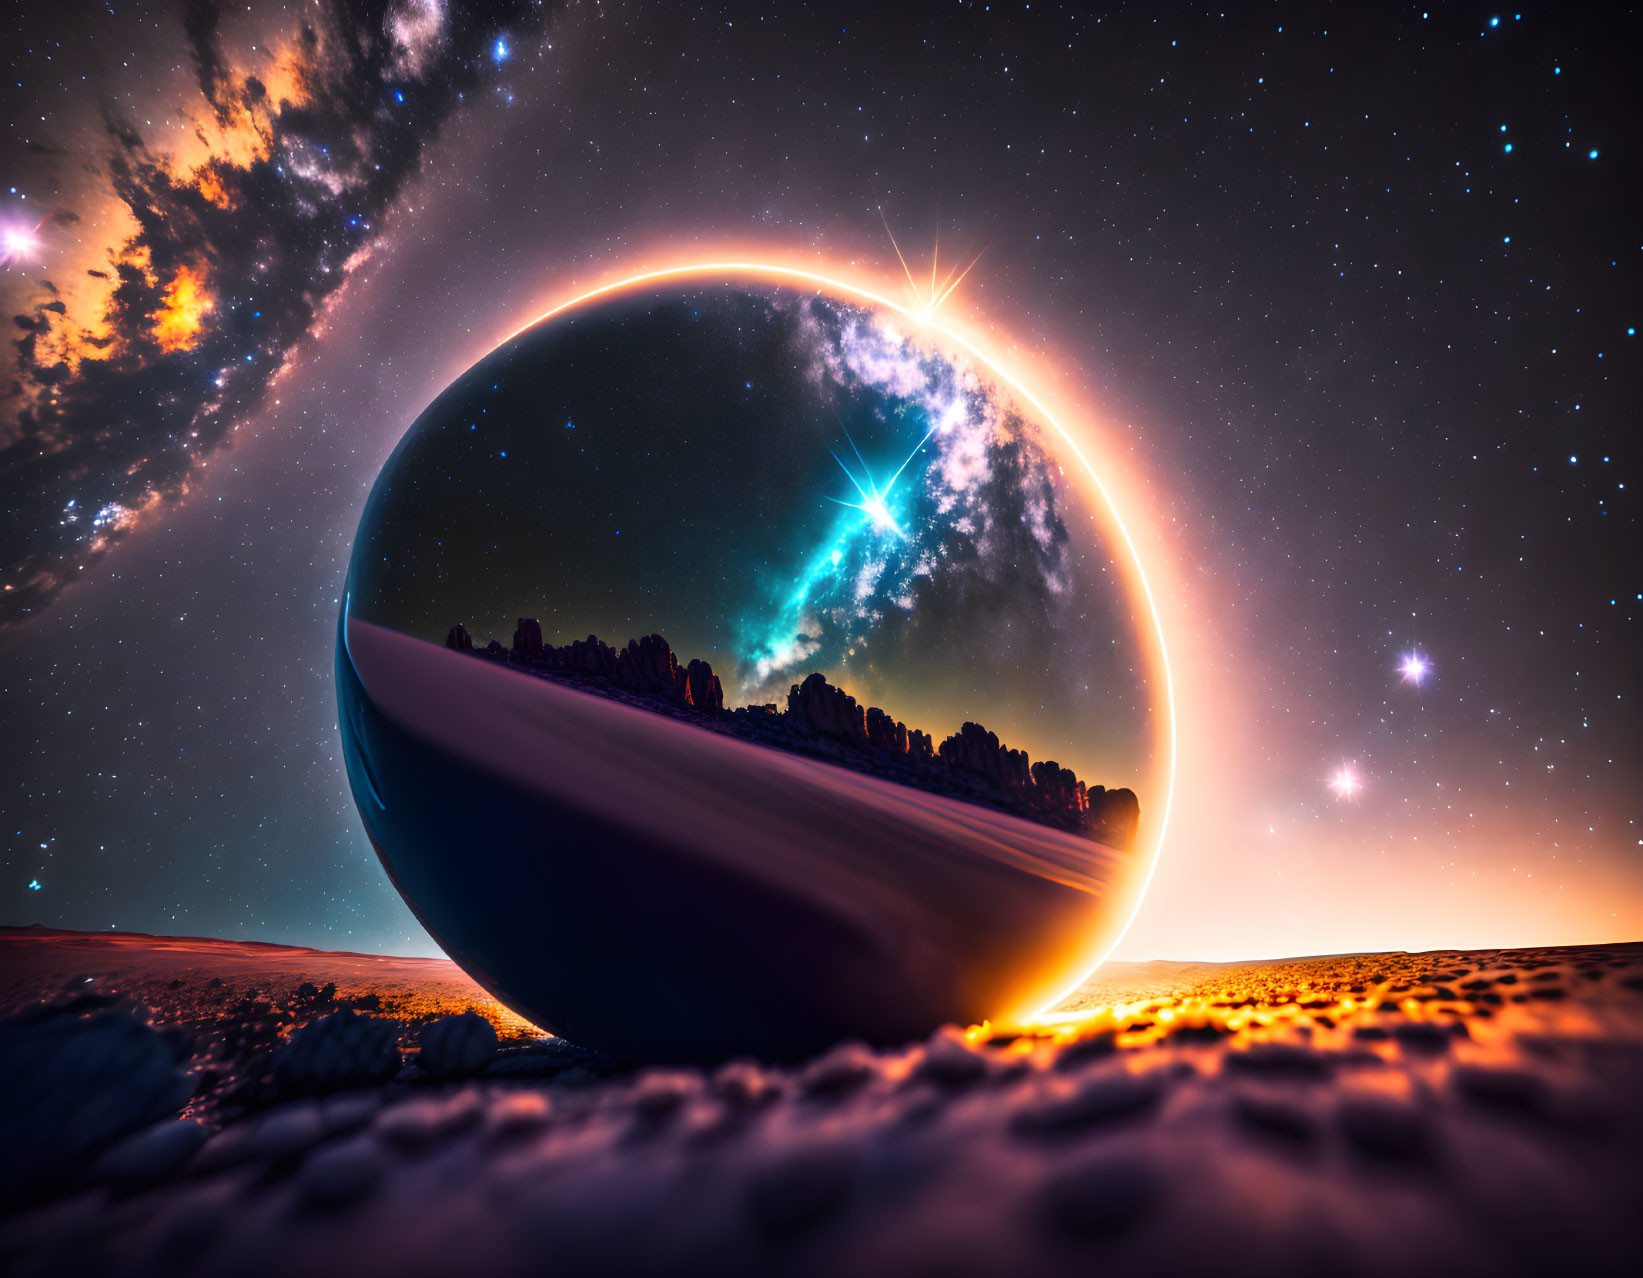 Gigantic planet in cosmic landscape with vibrant nebula